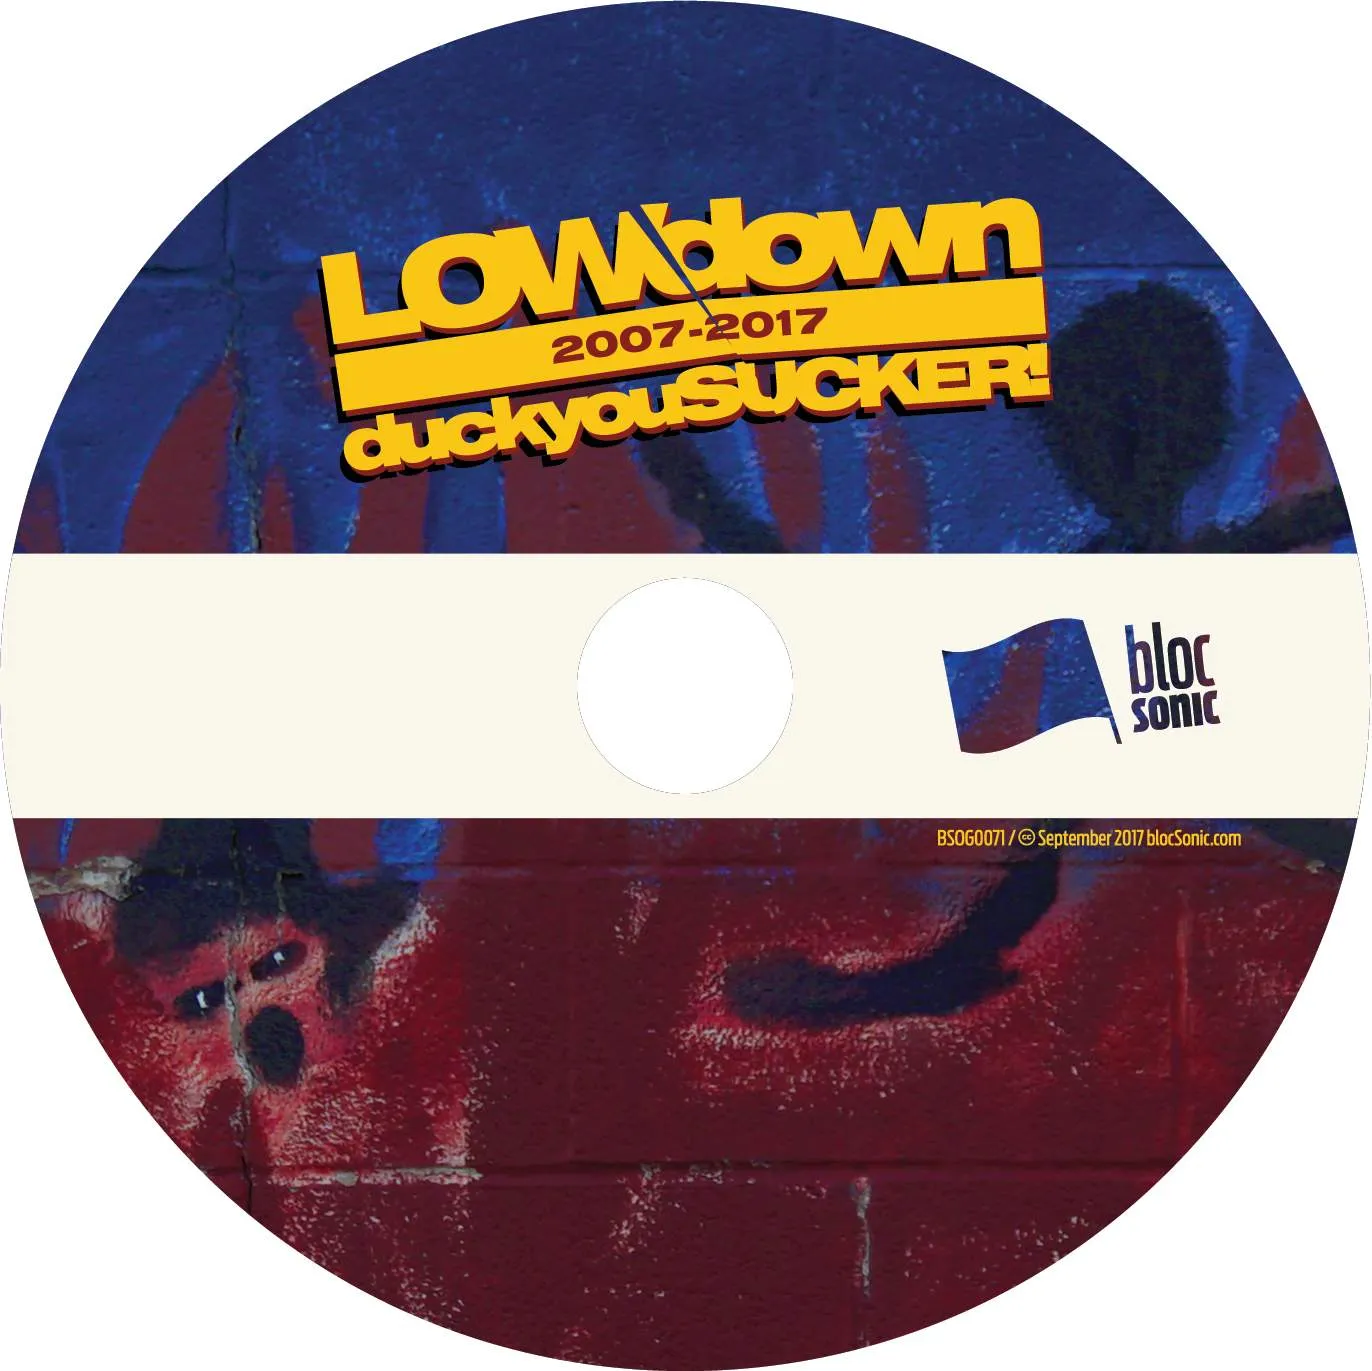 Album disc for “duckyouSUCKER!” by LOWdown